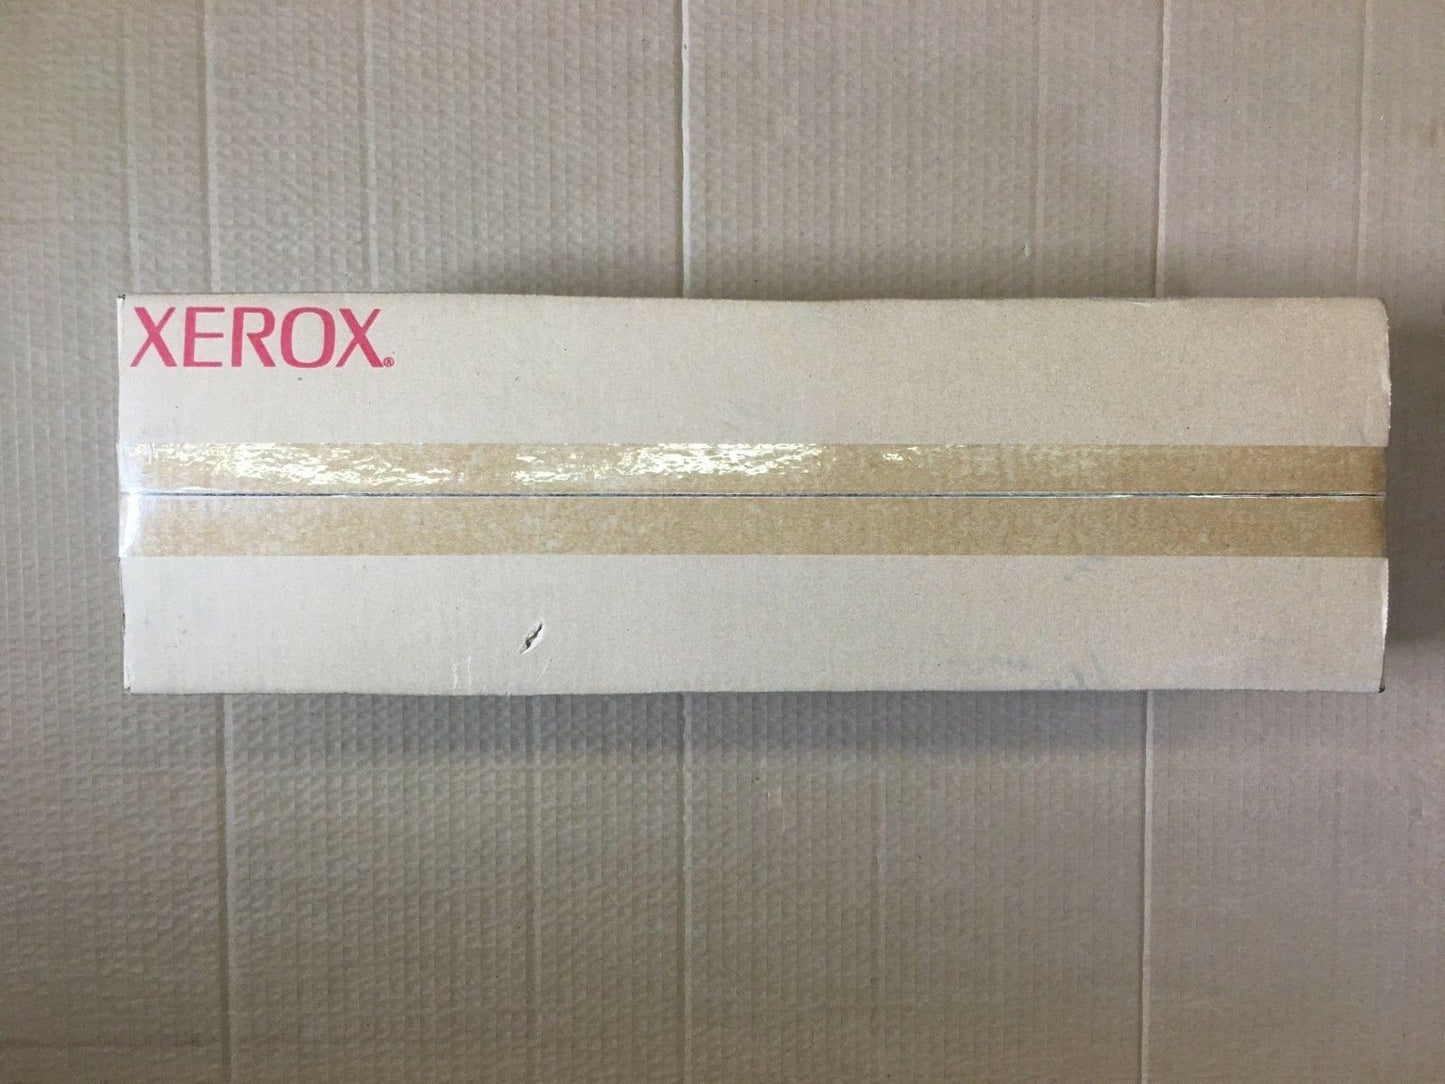 Xerox WorkCentre 7132 7232 7242 001R00593 IBT Belt Cleaner - FedEx 2Day Air!! - copier-clearance-center